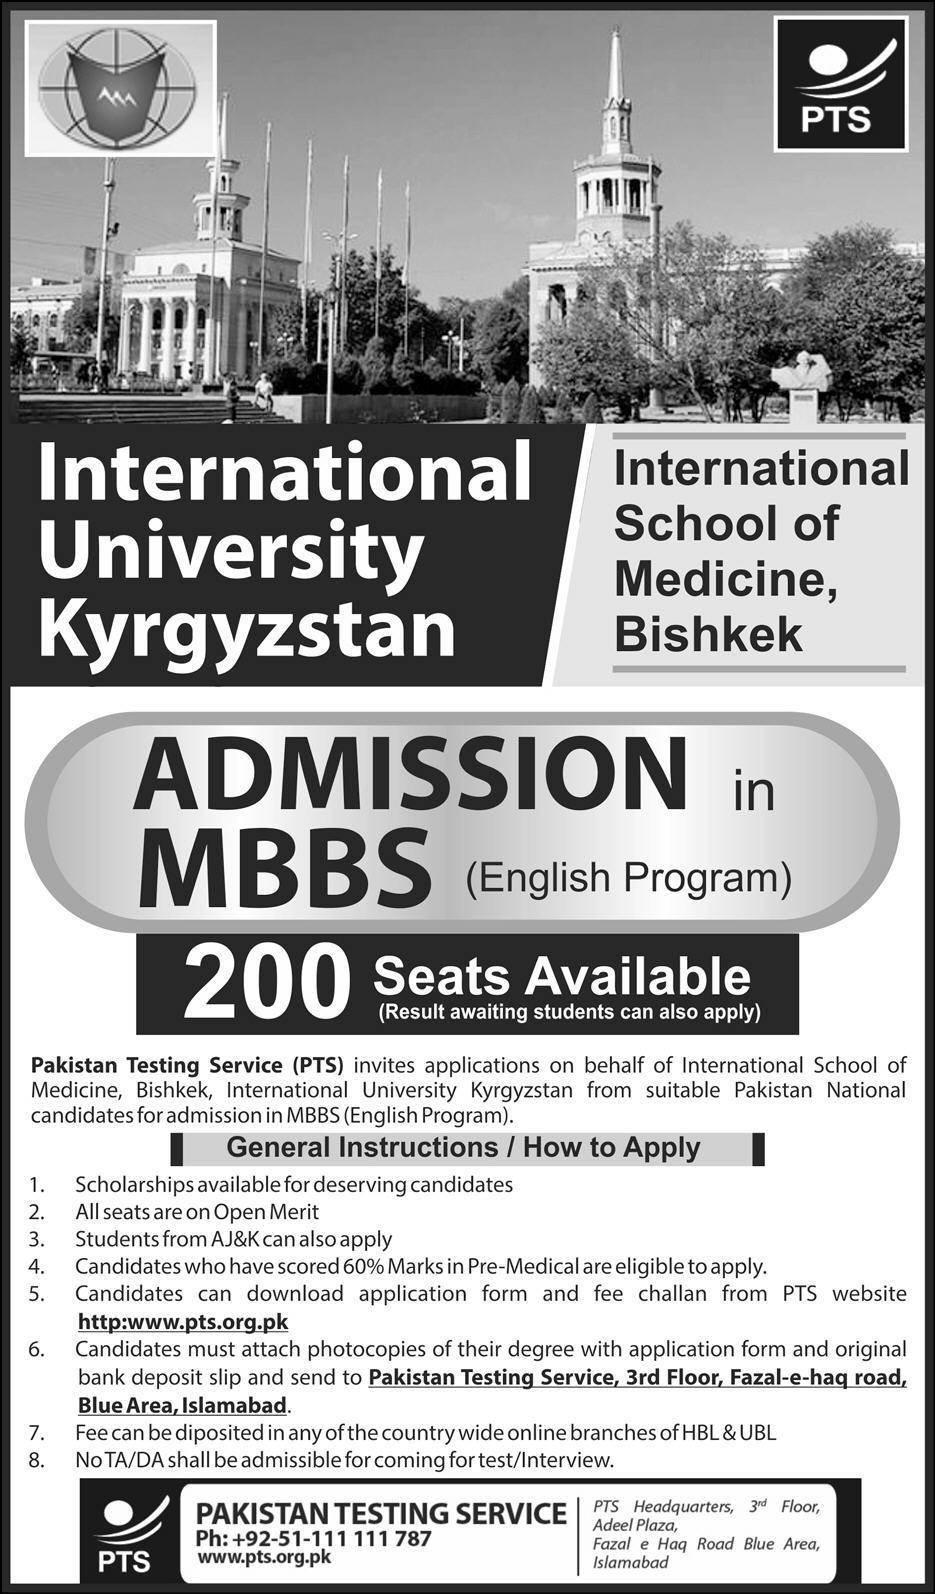 International University Kyrgyzstan MBBS Admission 2018, PTS Test